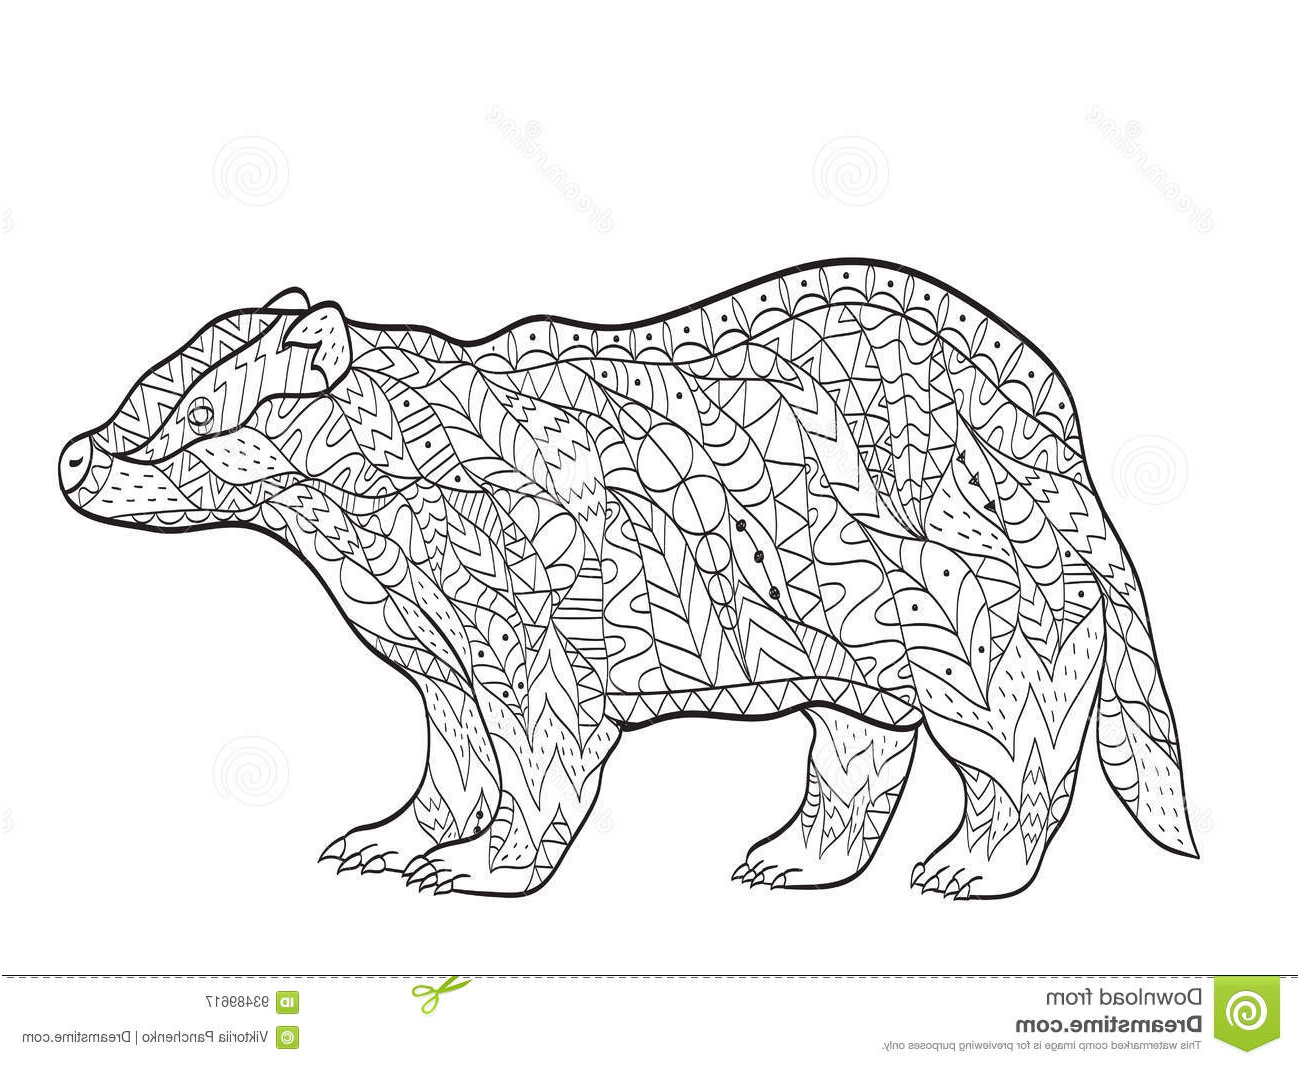 stock illustration vector coloring european badger adults illustration anti stress adult animal zentangle style black white image